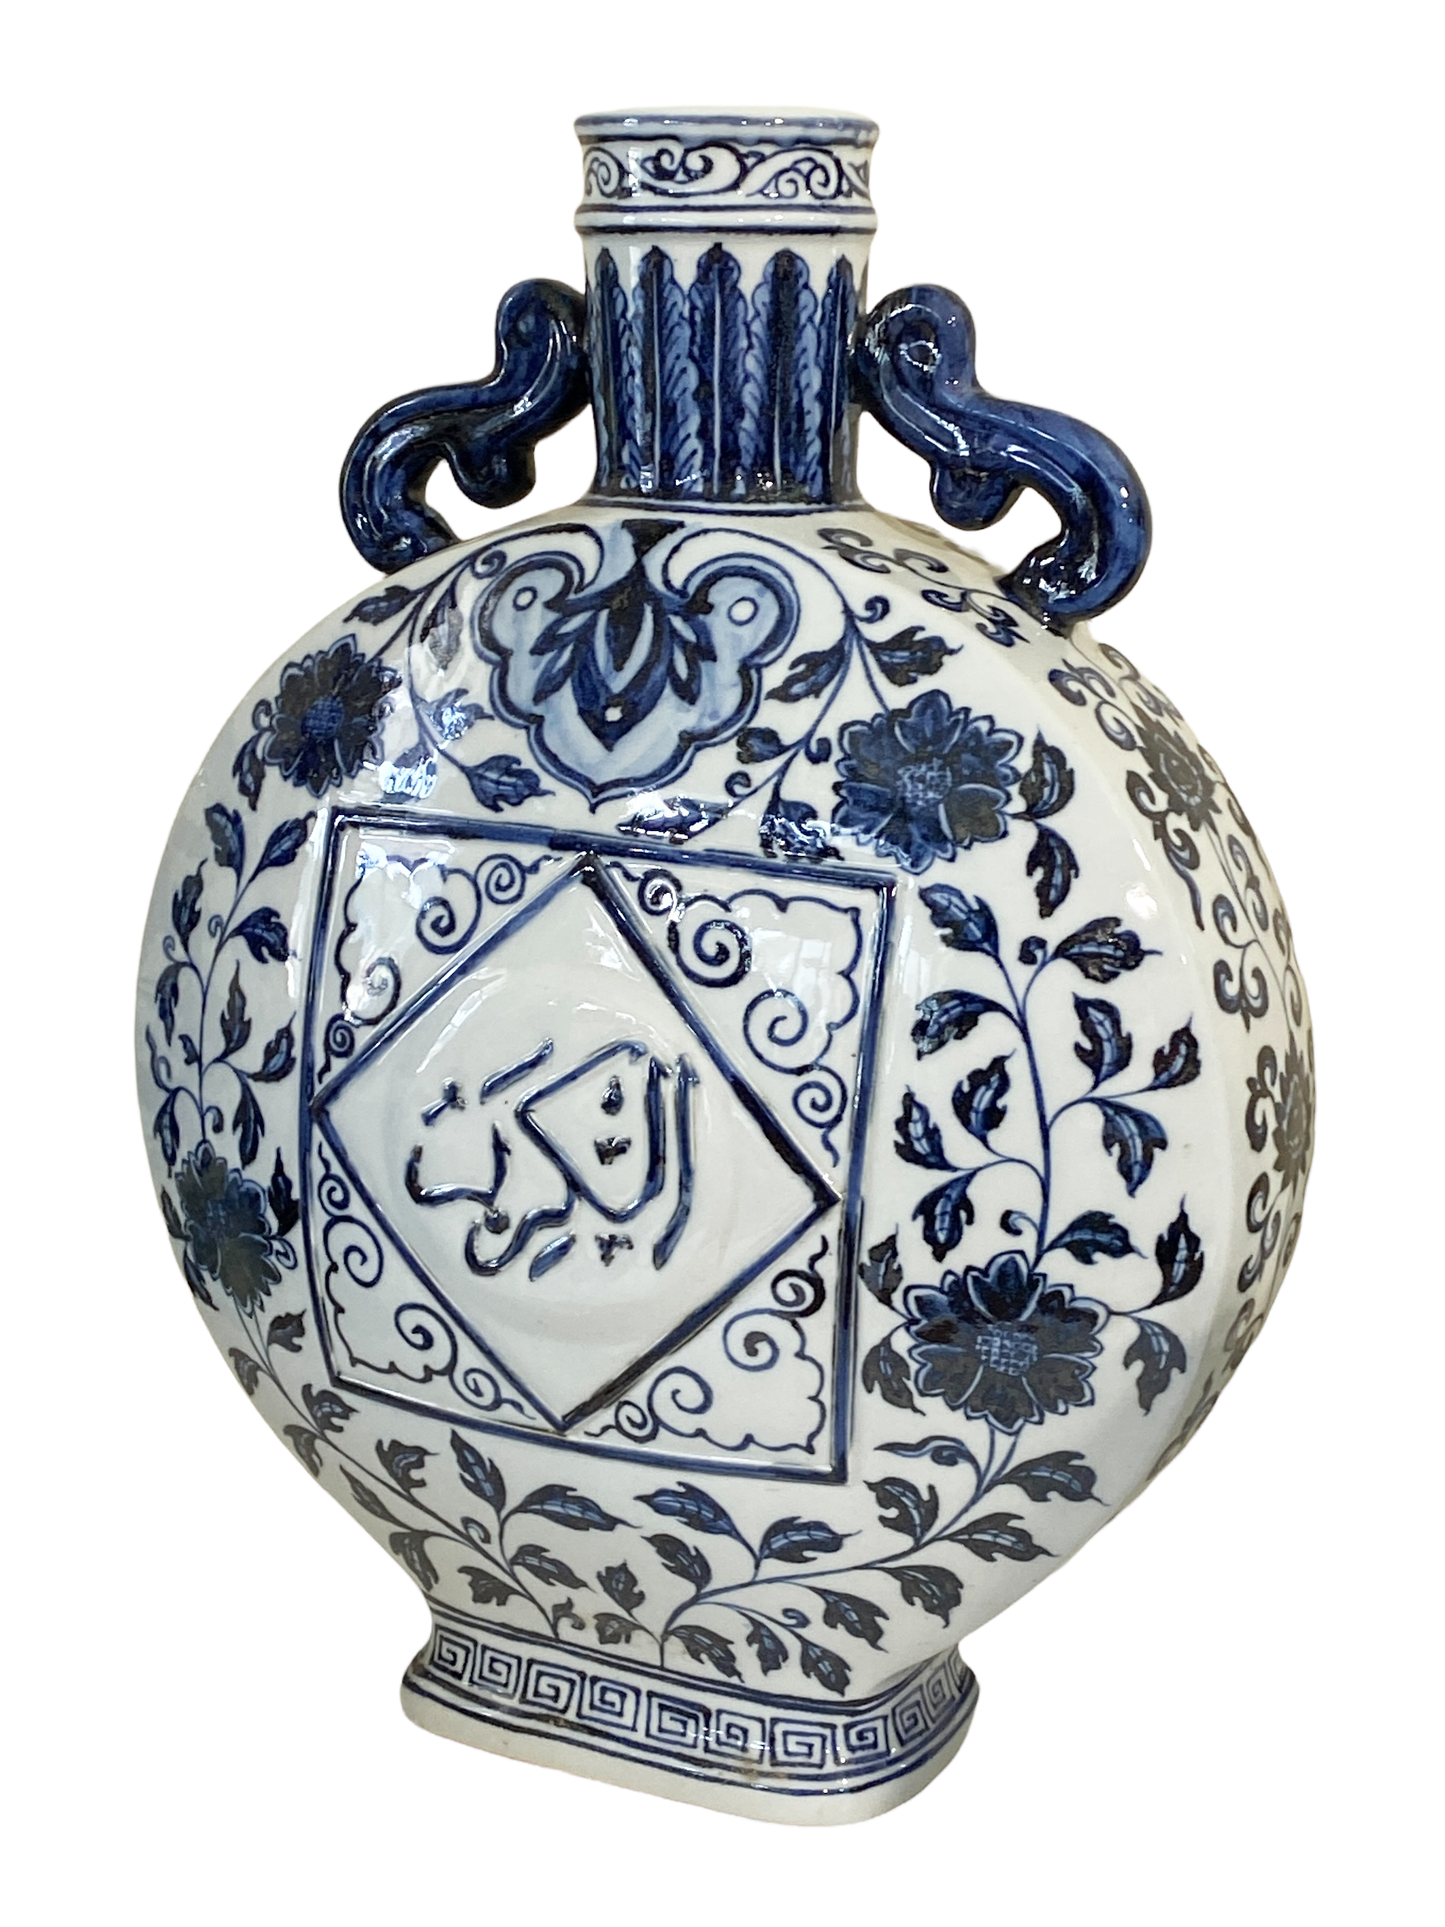 # 4689 Chinoiserie B&W Moon Flask W/ Islamic Characters 19"H